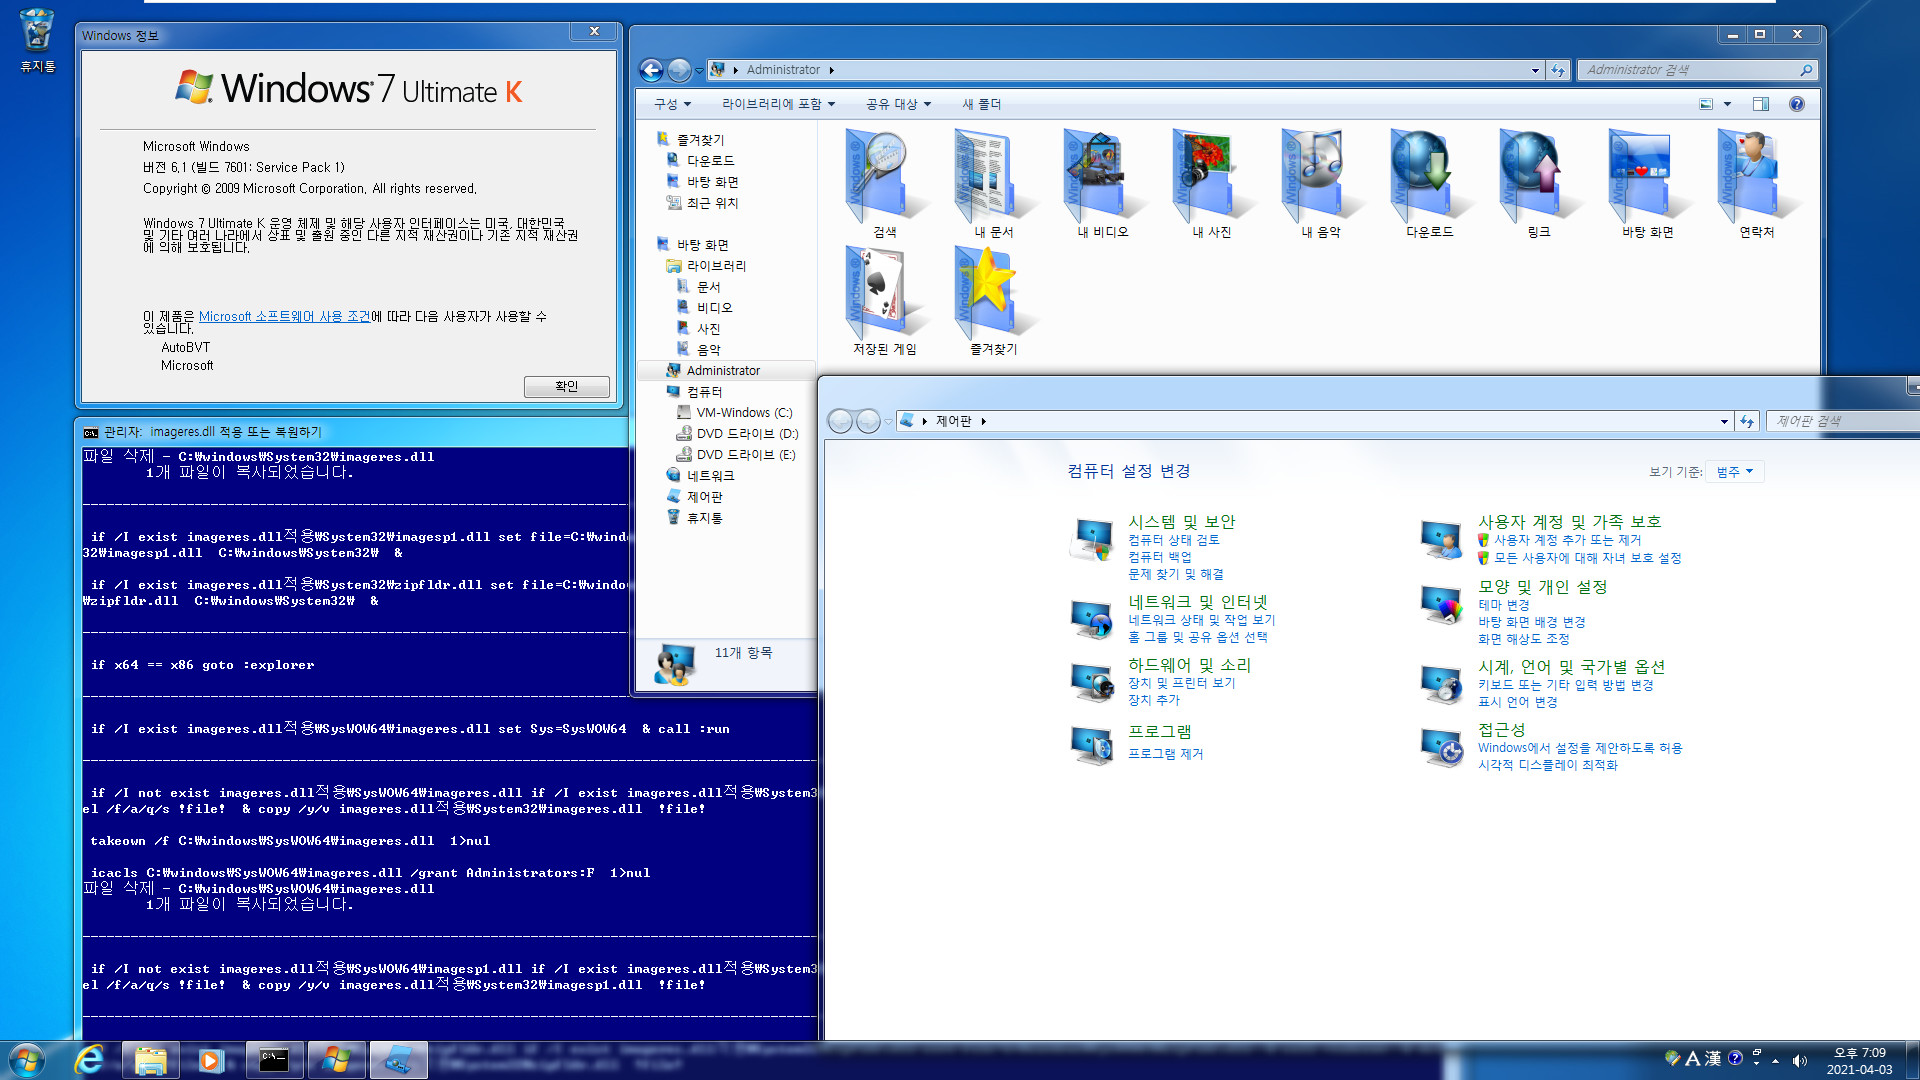 imageres.dll 윈도우 10 버전 1809와 윈도우 7 호환되도록 2가지 윈도우의 원본 imageres.dll을 합치고, 윈도우 7 라이브러리 안에 폴더 아이콘들 변경하여 테스트 2021-04-03_190915.jpg